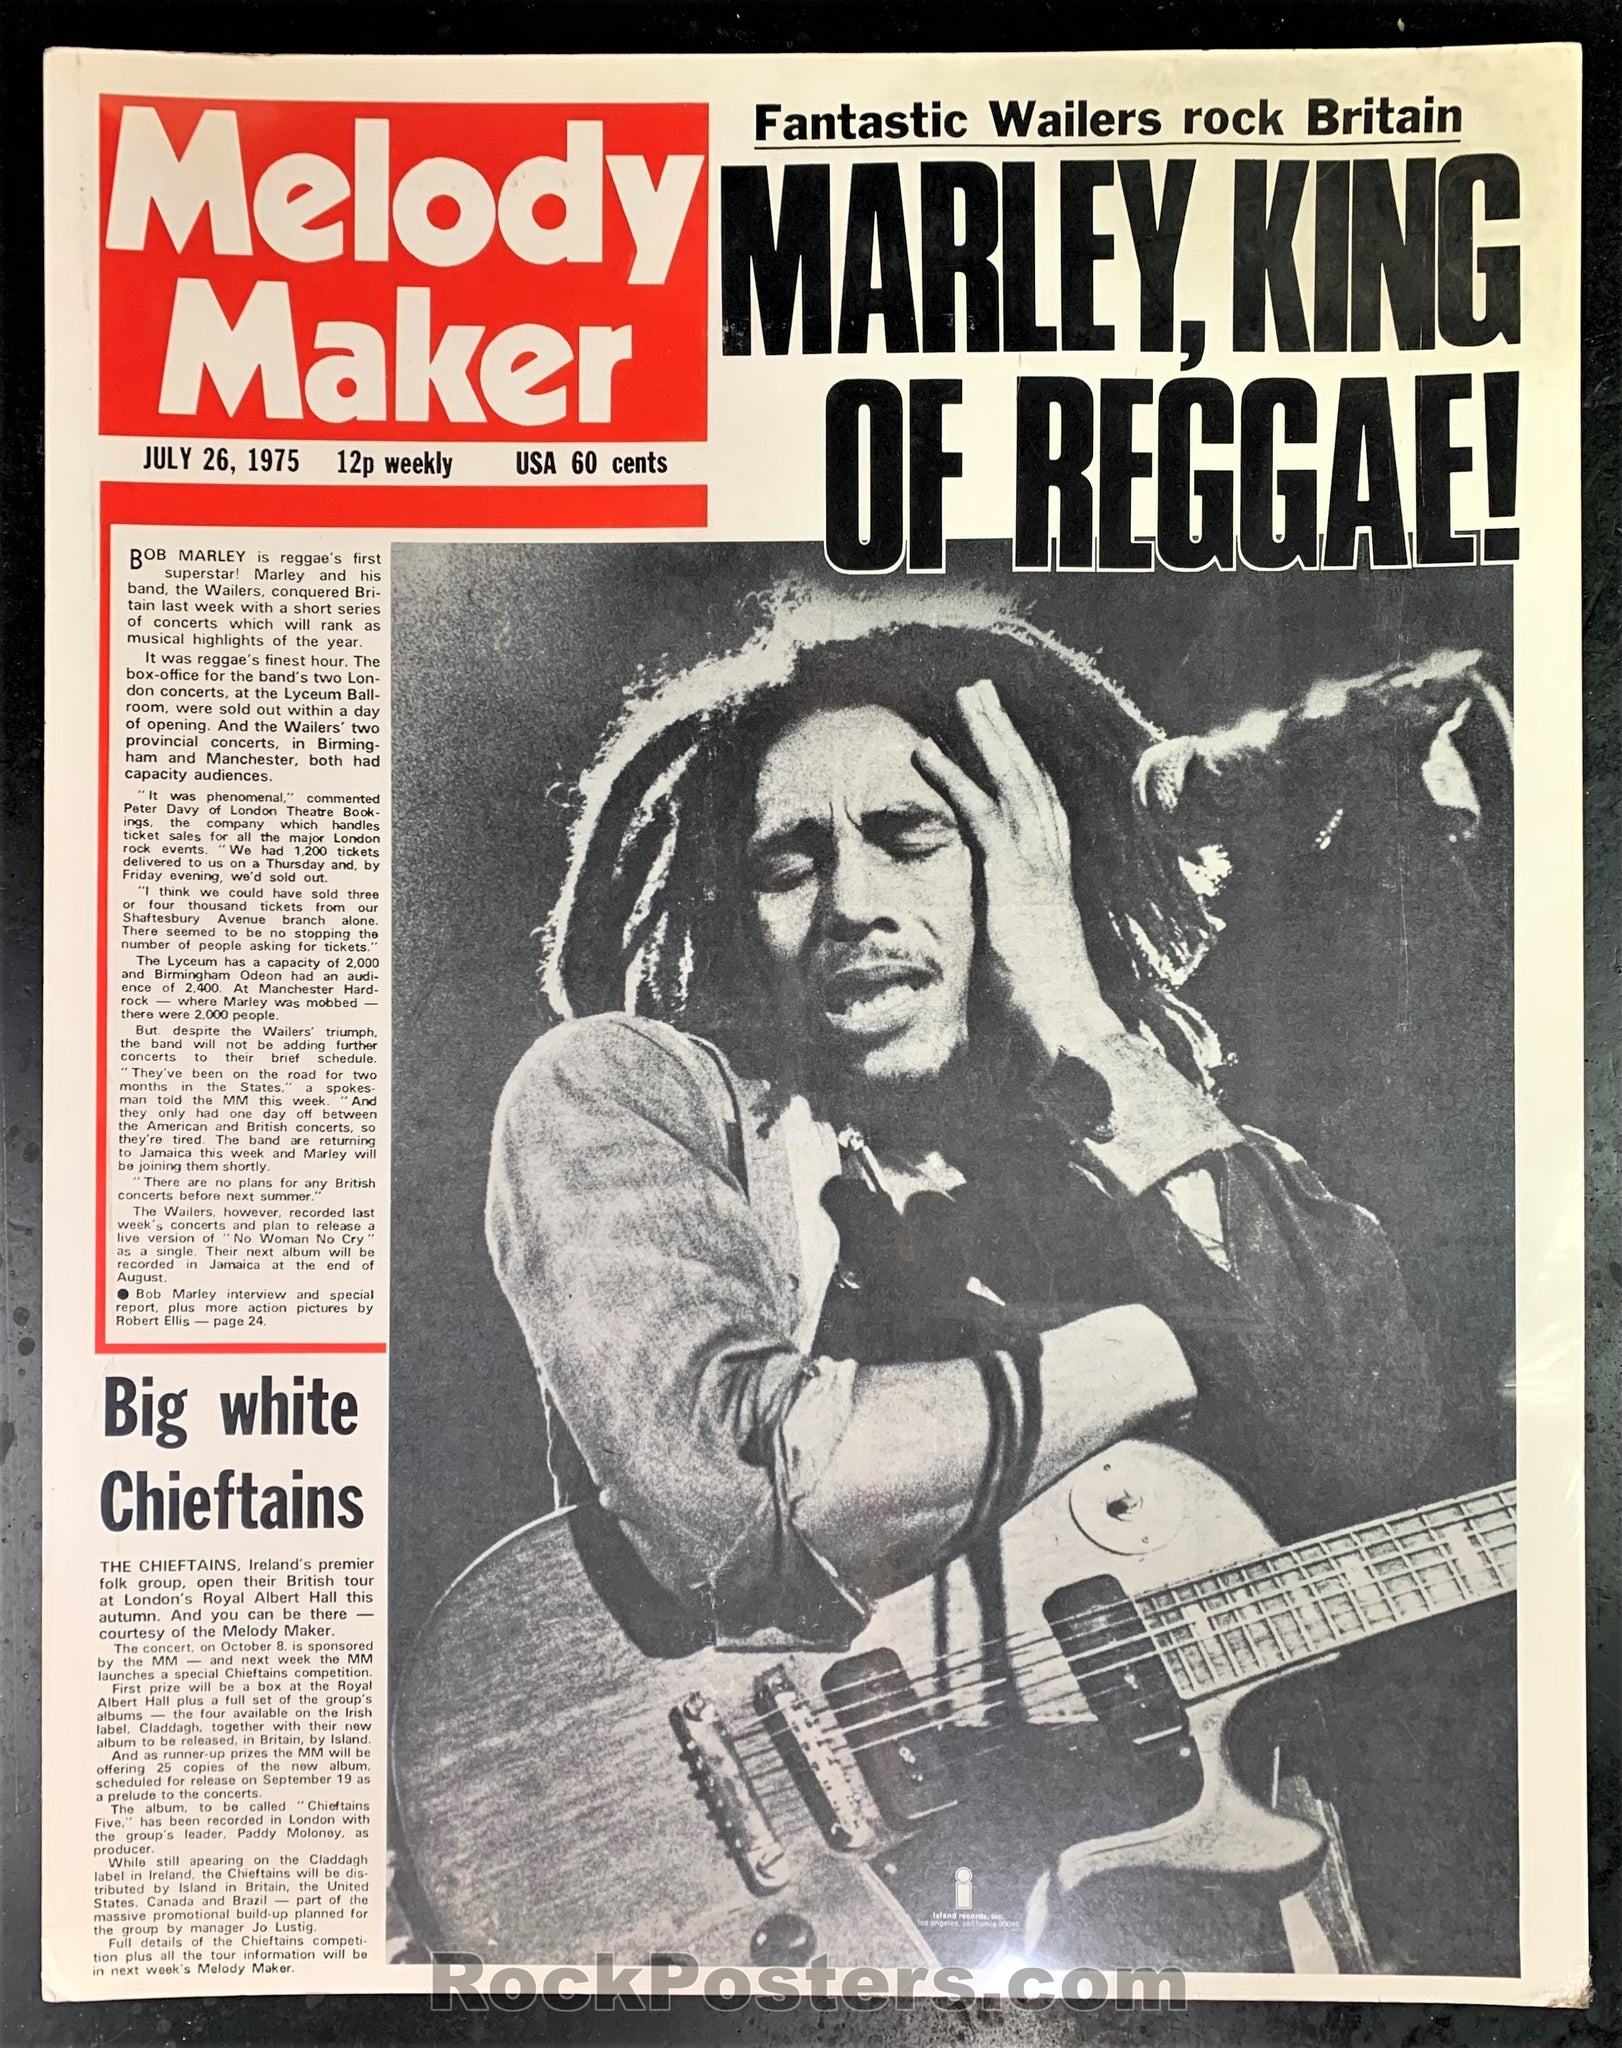 AUCTION - Bob Marley - Island Records 1975 Countertop Display - Near Mint Minus